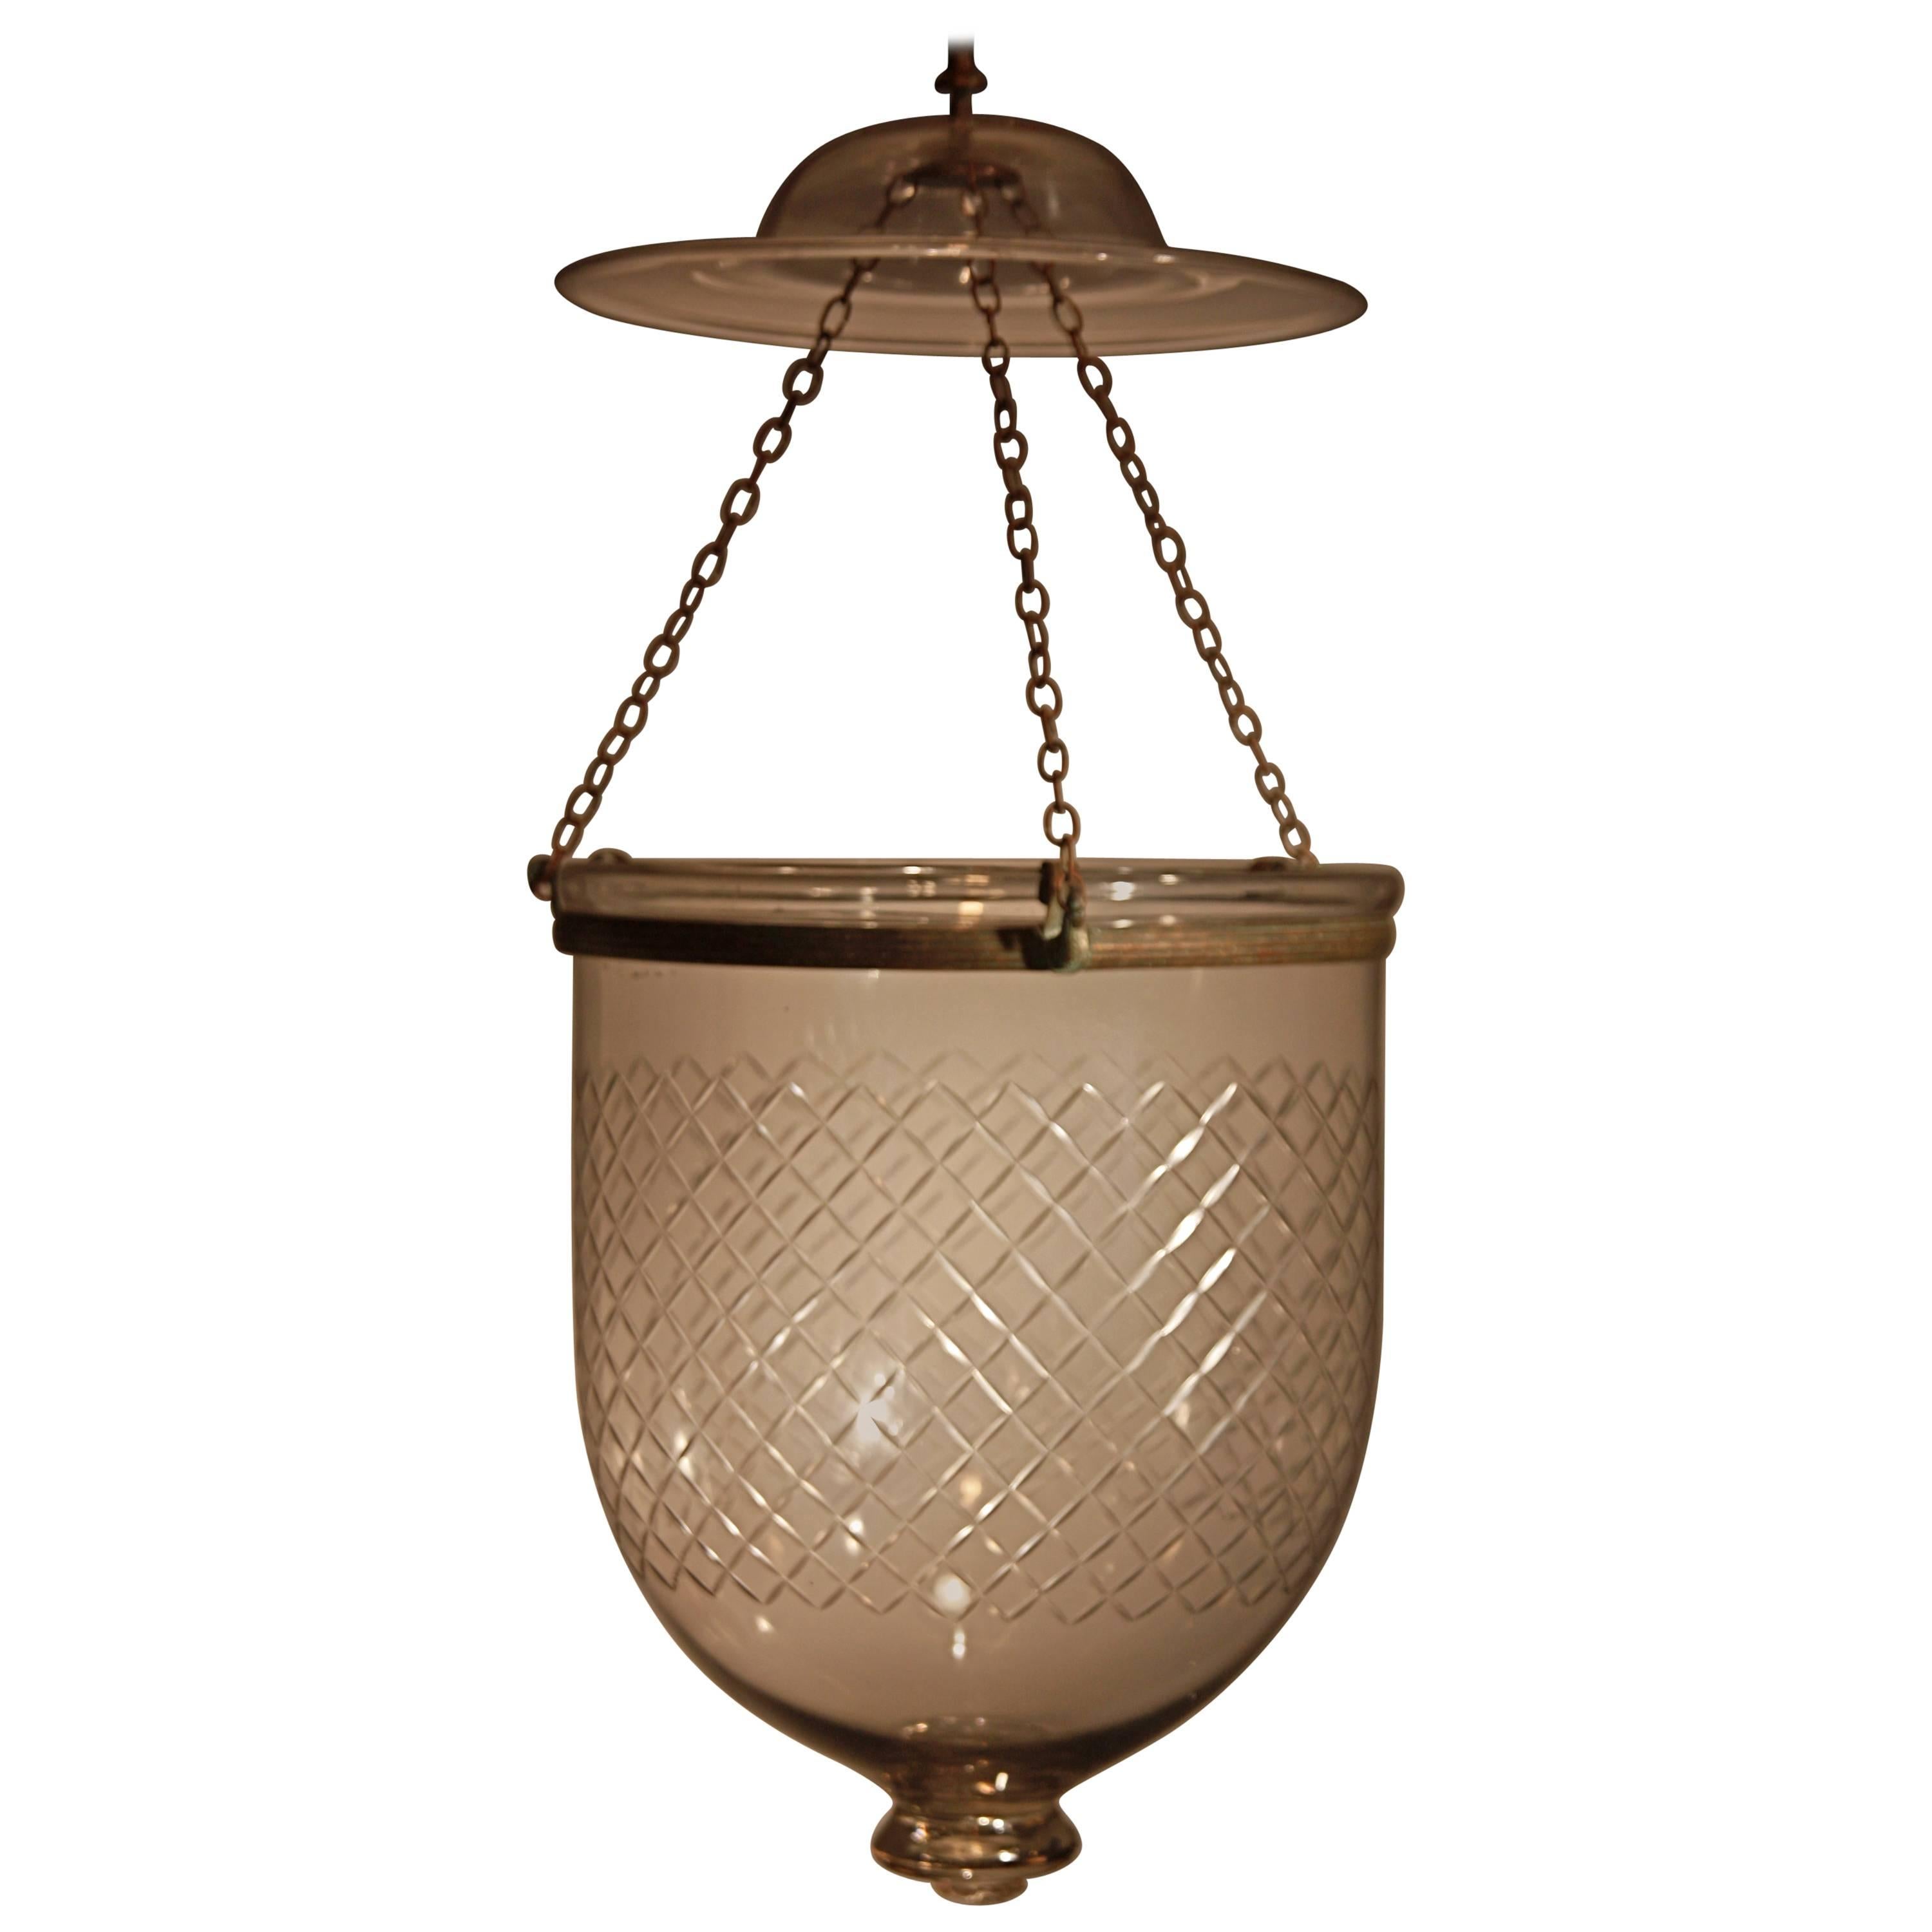 19th Century Bell Jar